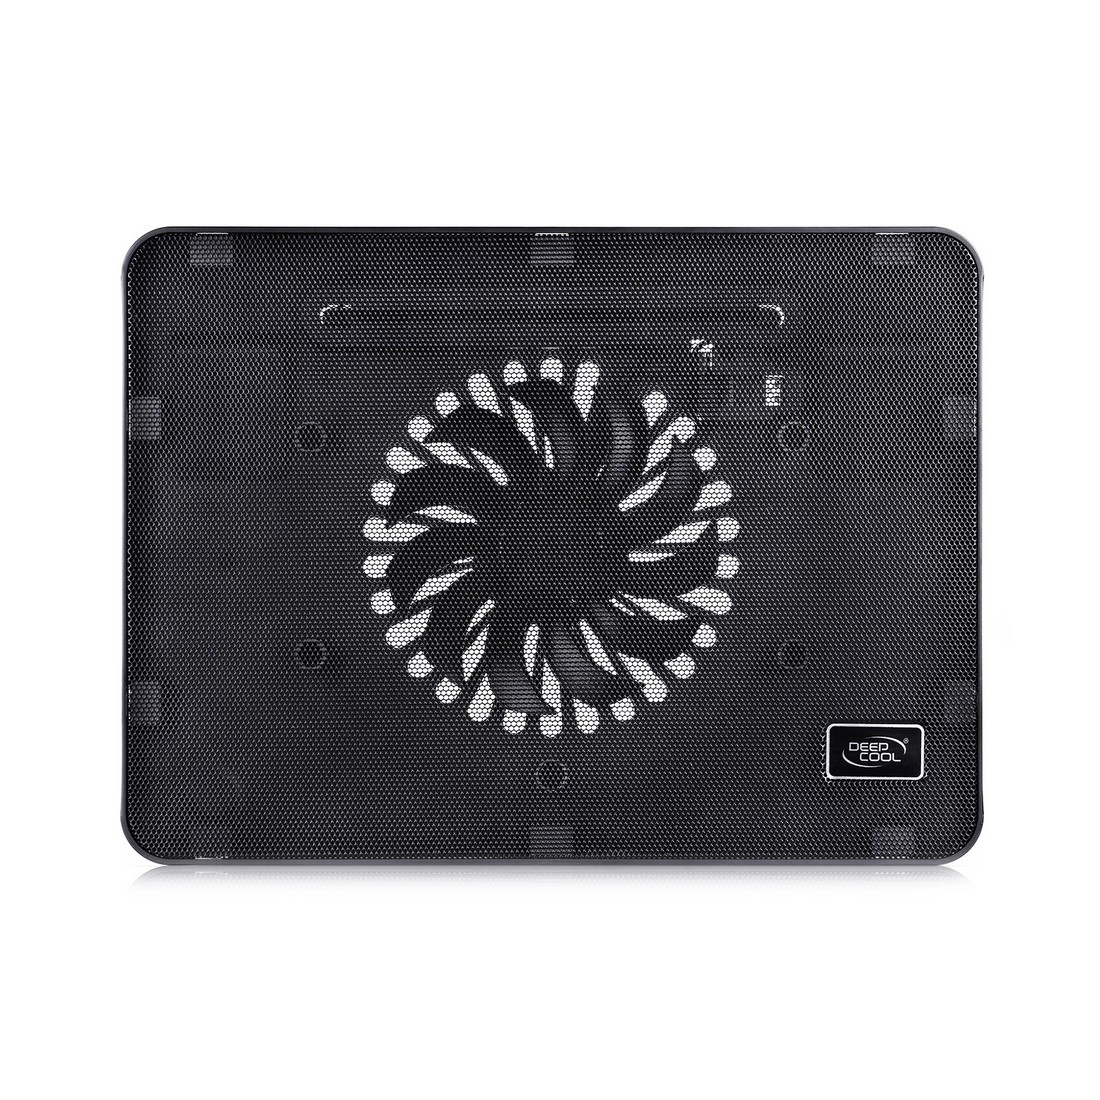 картинка Подставка для ноутбука охлаждающая DEEPCOOL Wind Pal Mini, 15.6", Black от магазина itmag.kz